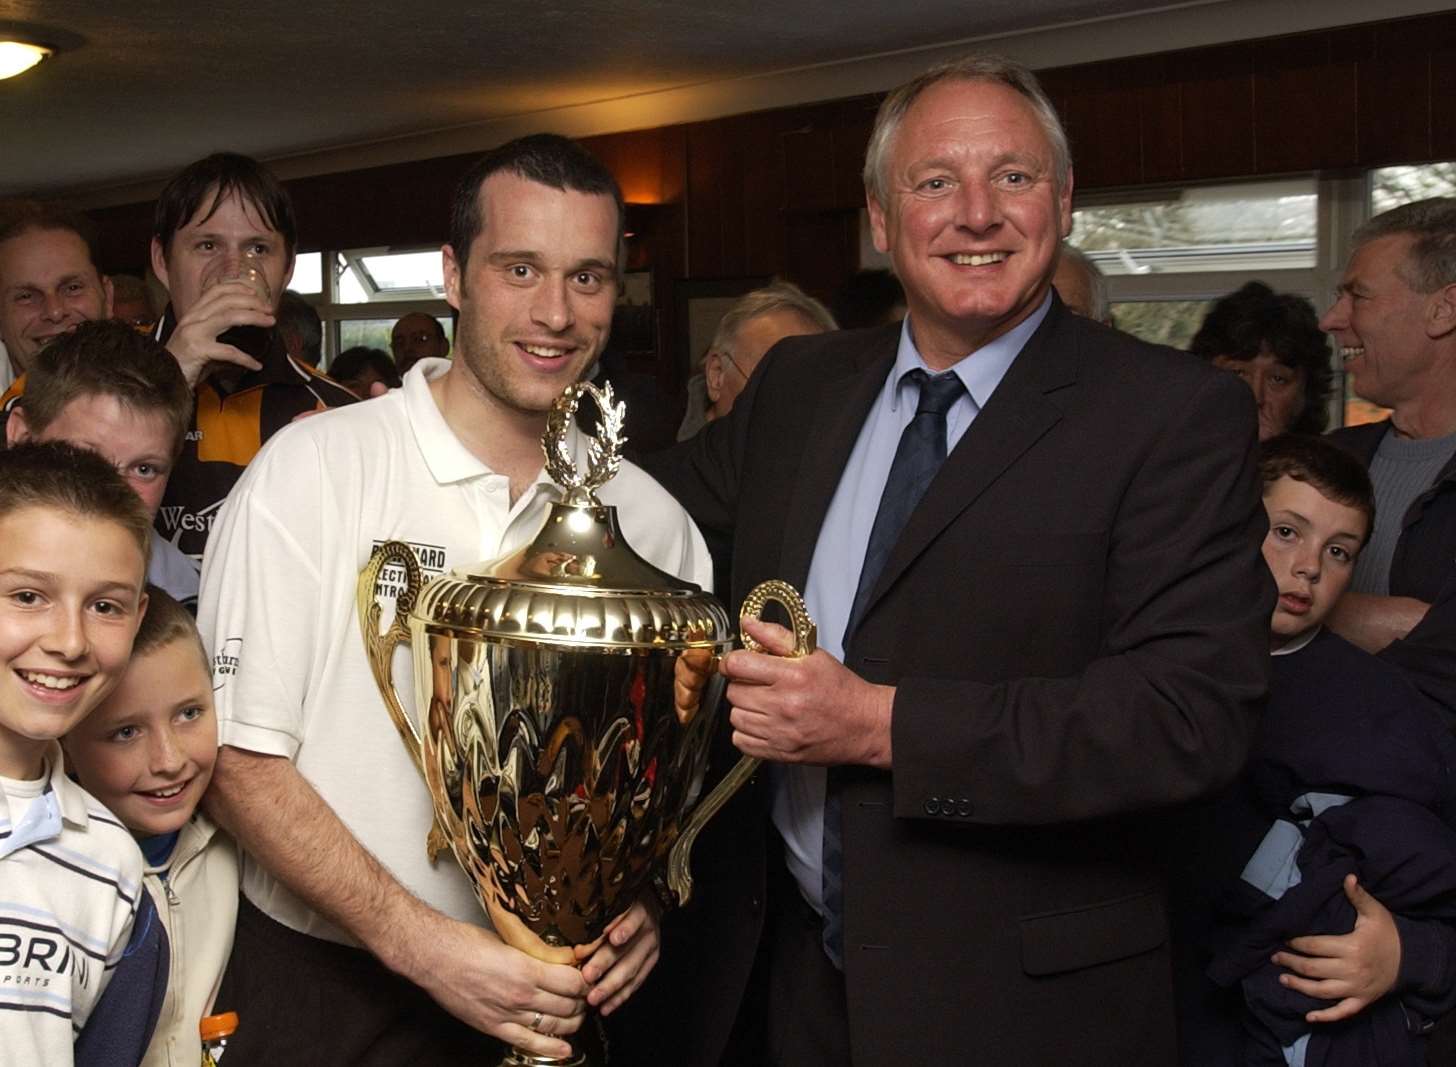 Adam Flanagan was Folkestone's player-of-the-year in 2004/05